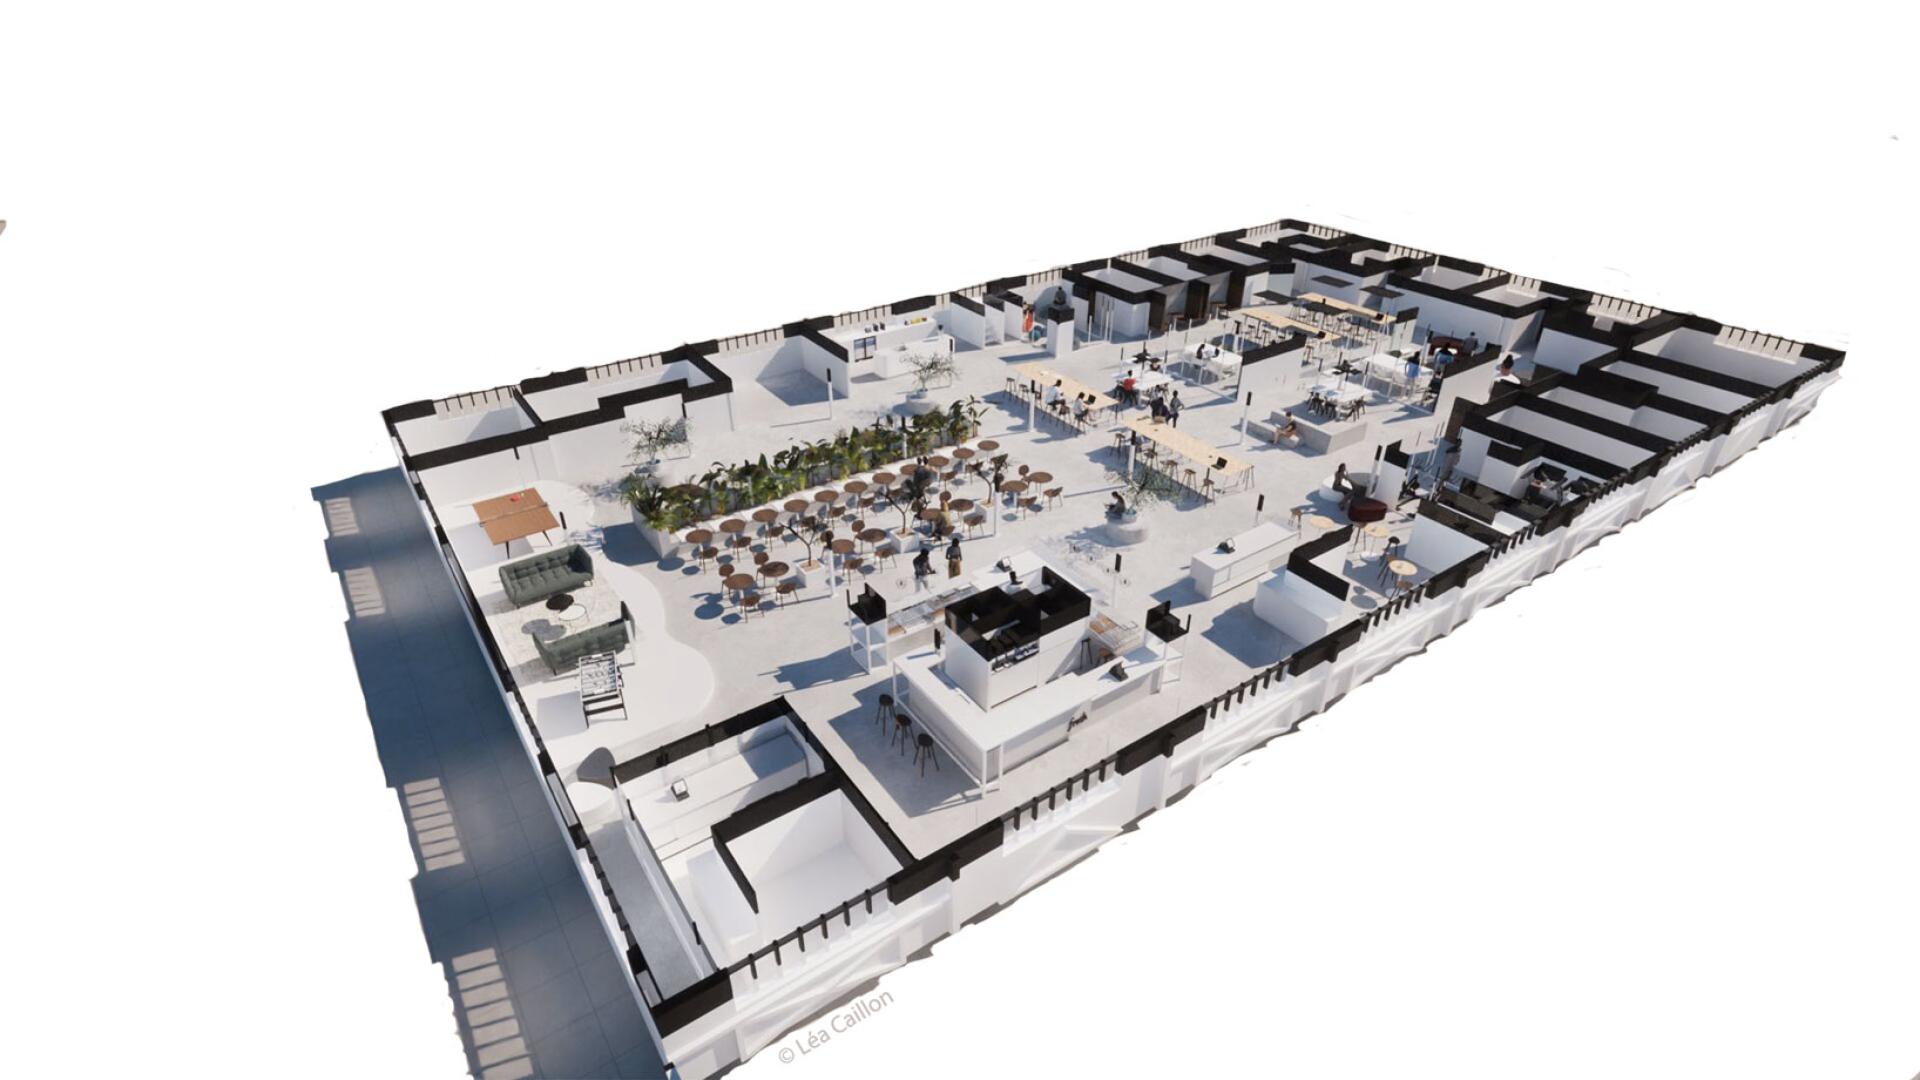 Plan 3D vu de haut interieur de l'usine beghin say